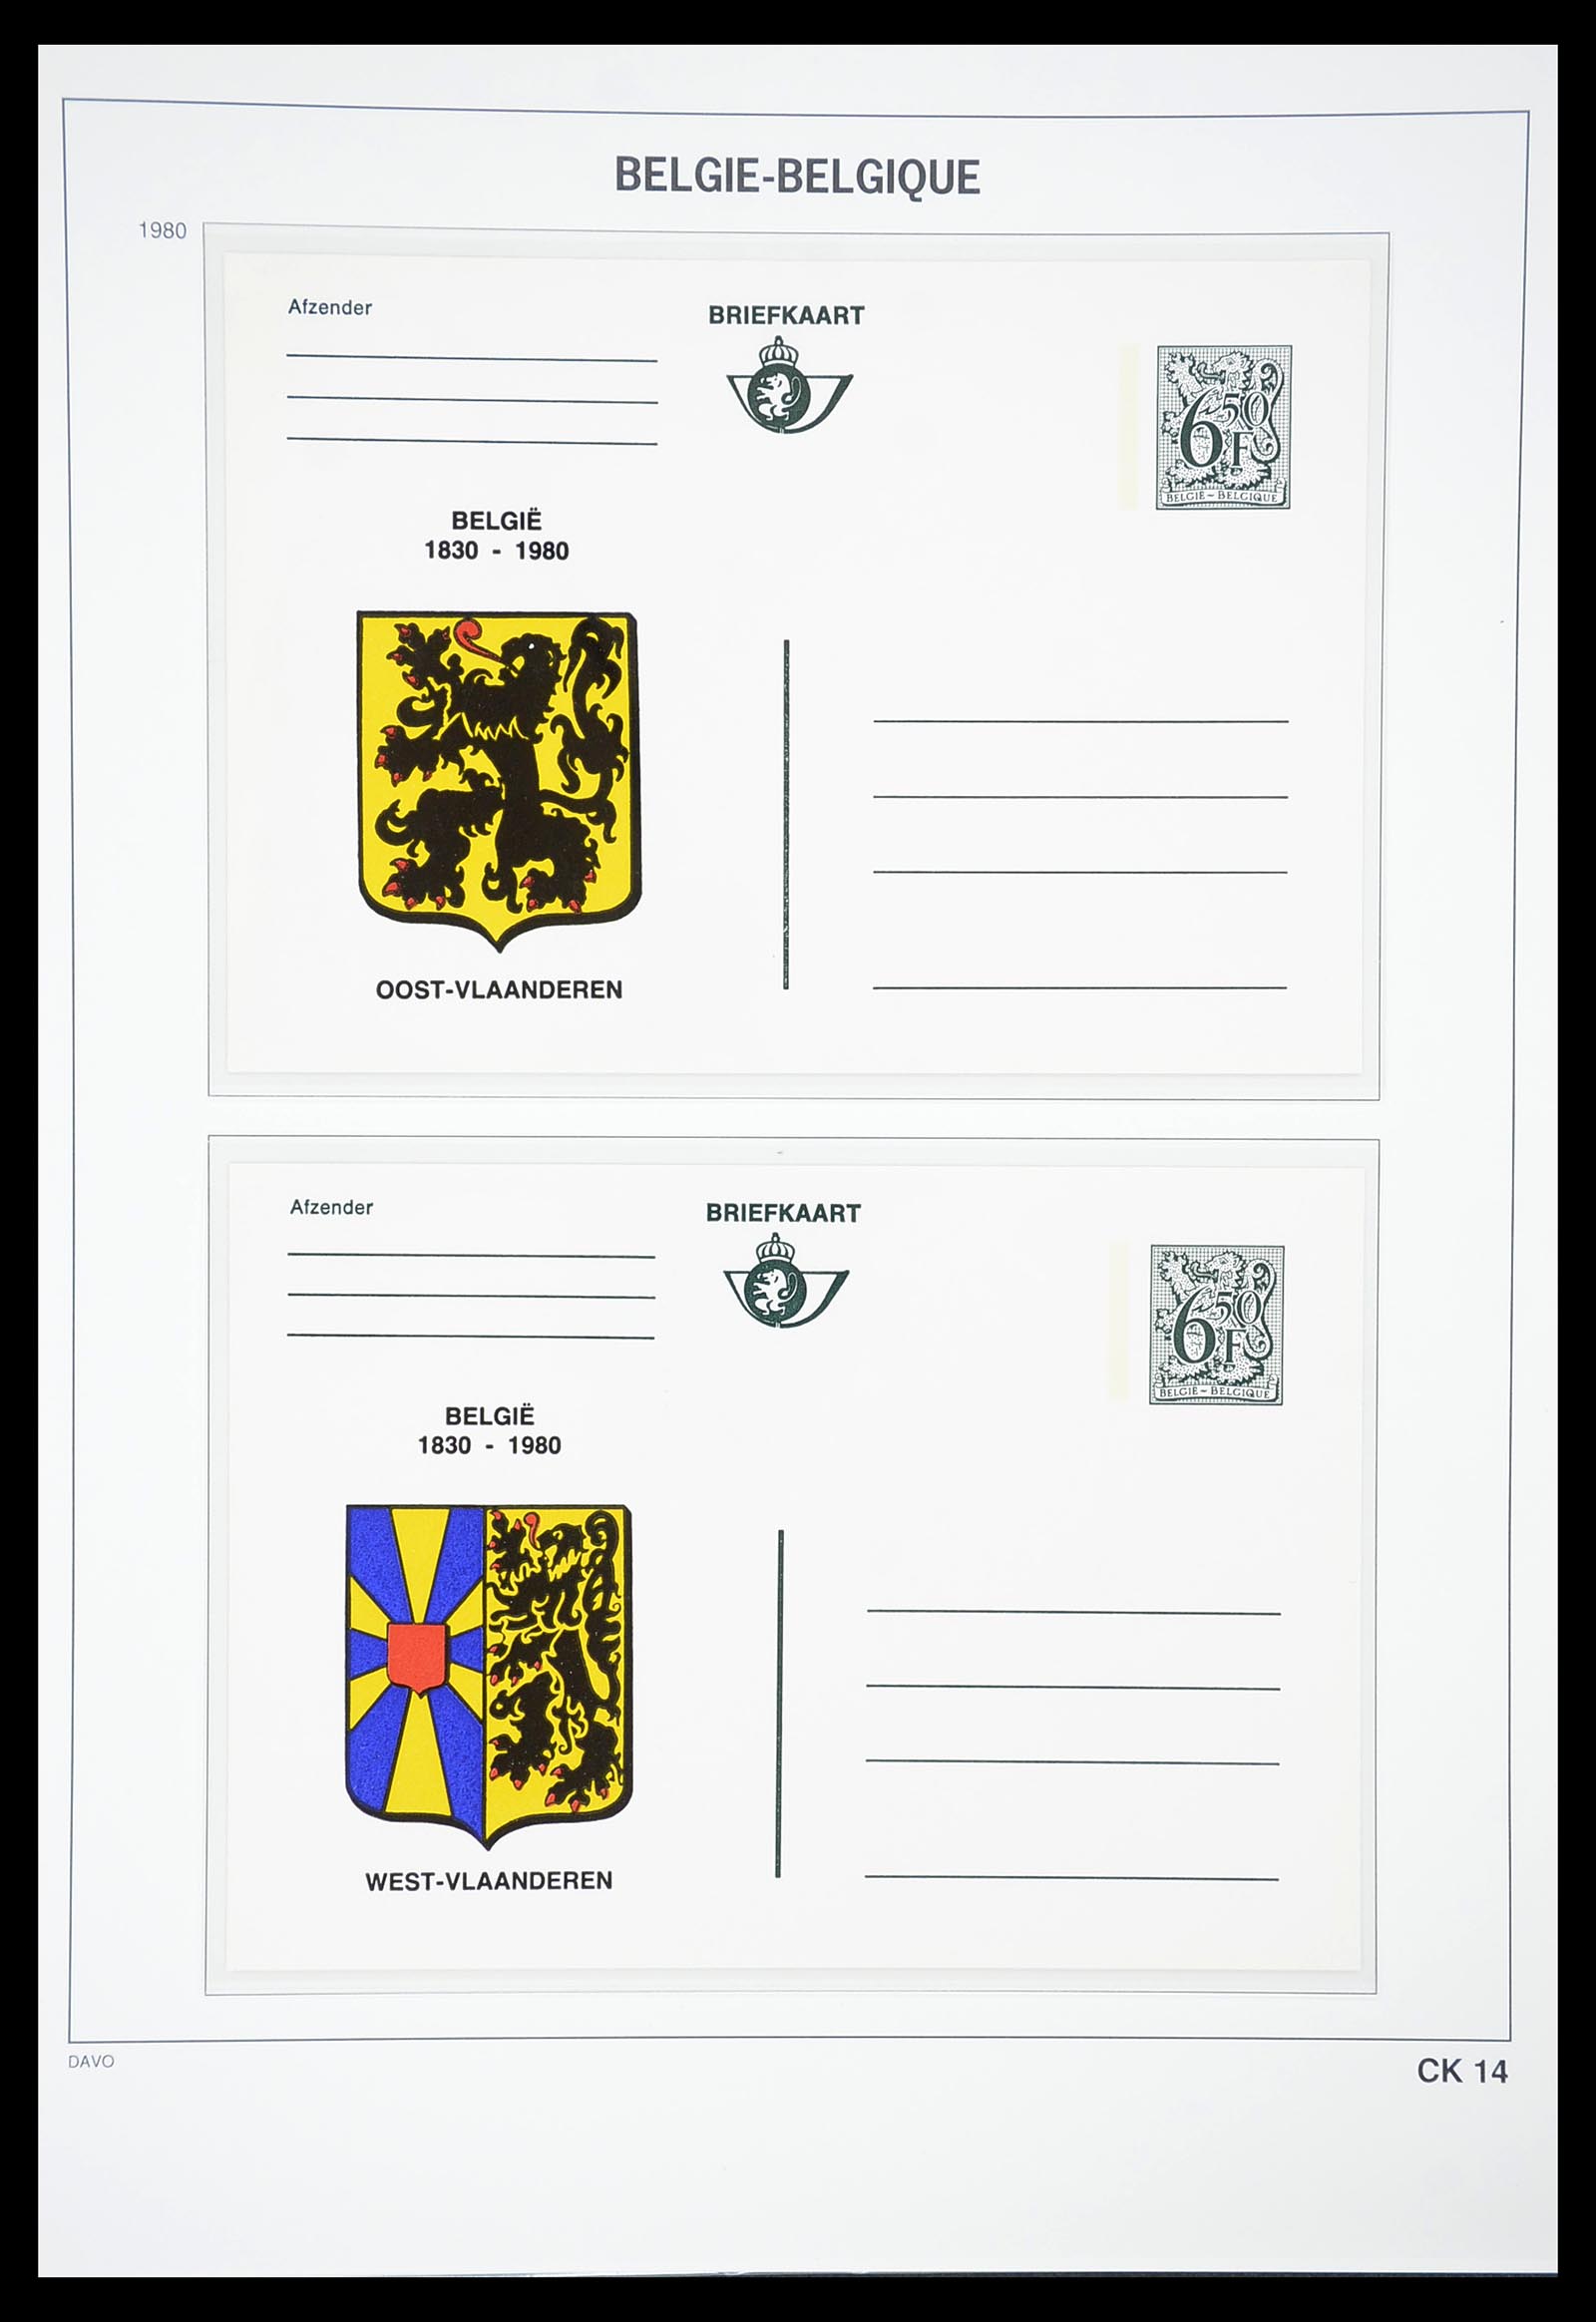 34639 014 - Stamp Collection 34639 Belgium postal cards 1971-2010.